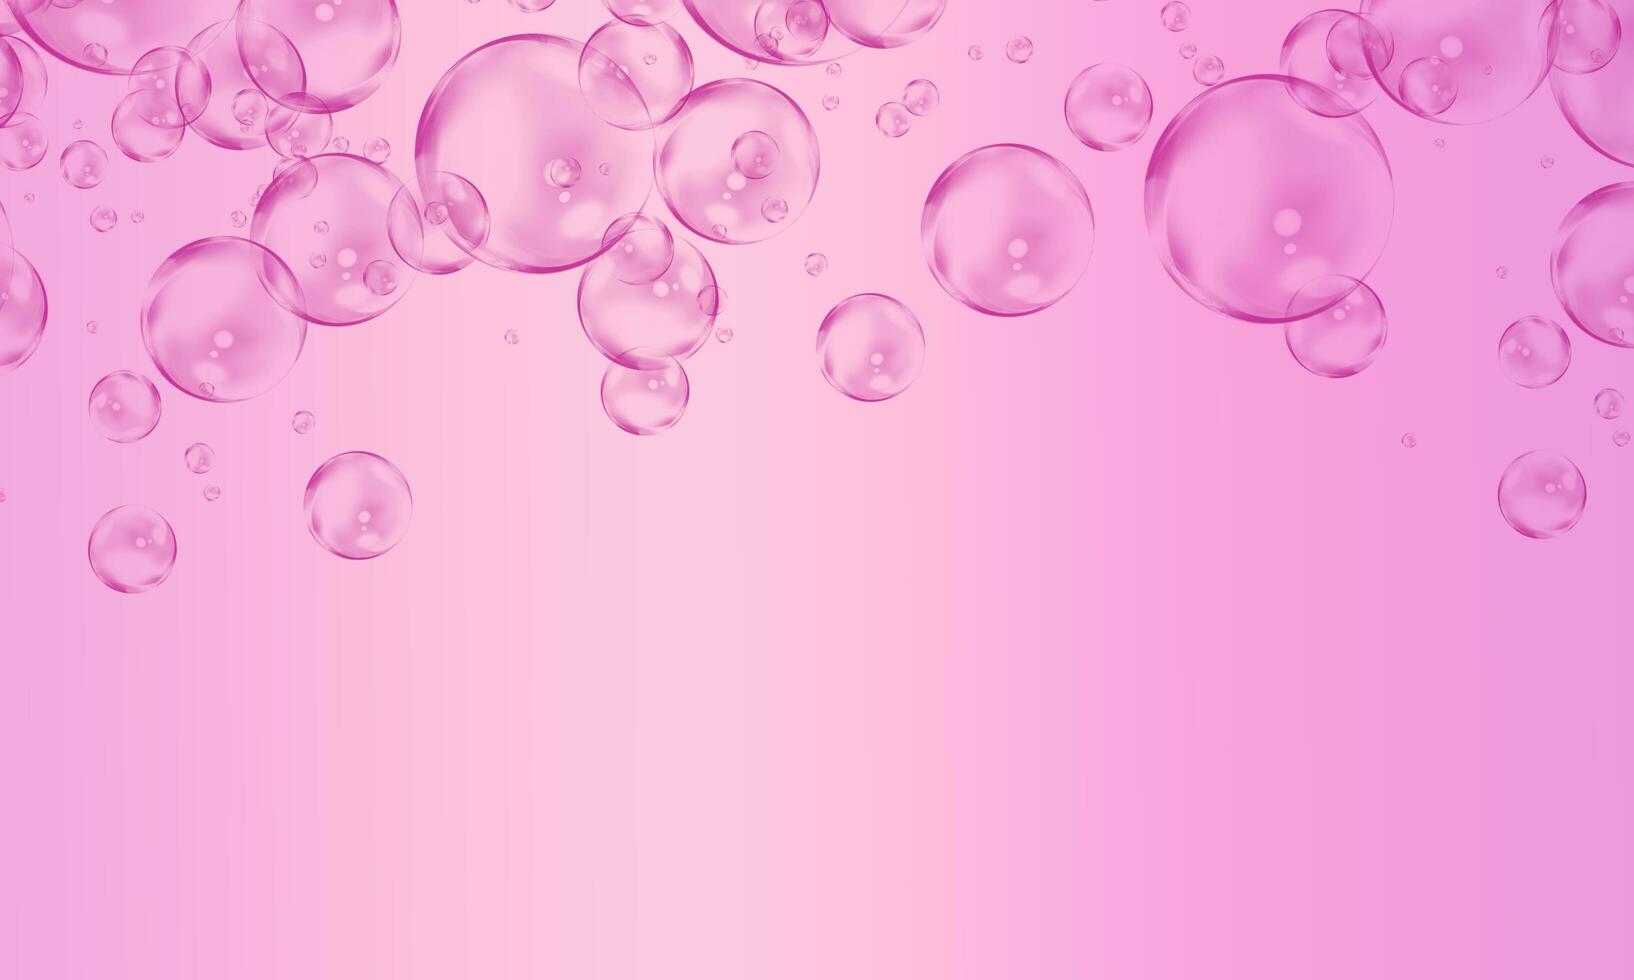 abstrakt lutning rosa bubbla bakgrund. foto